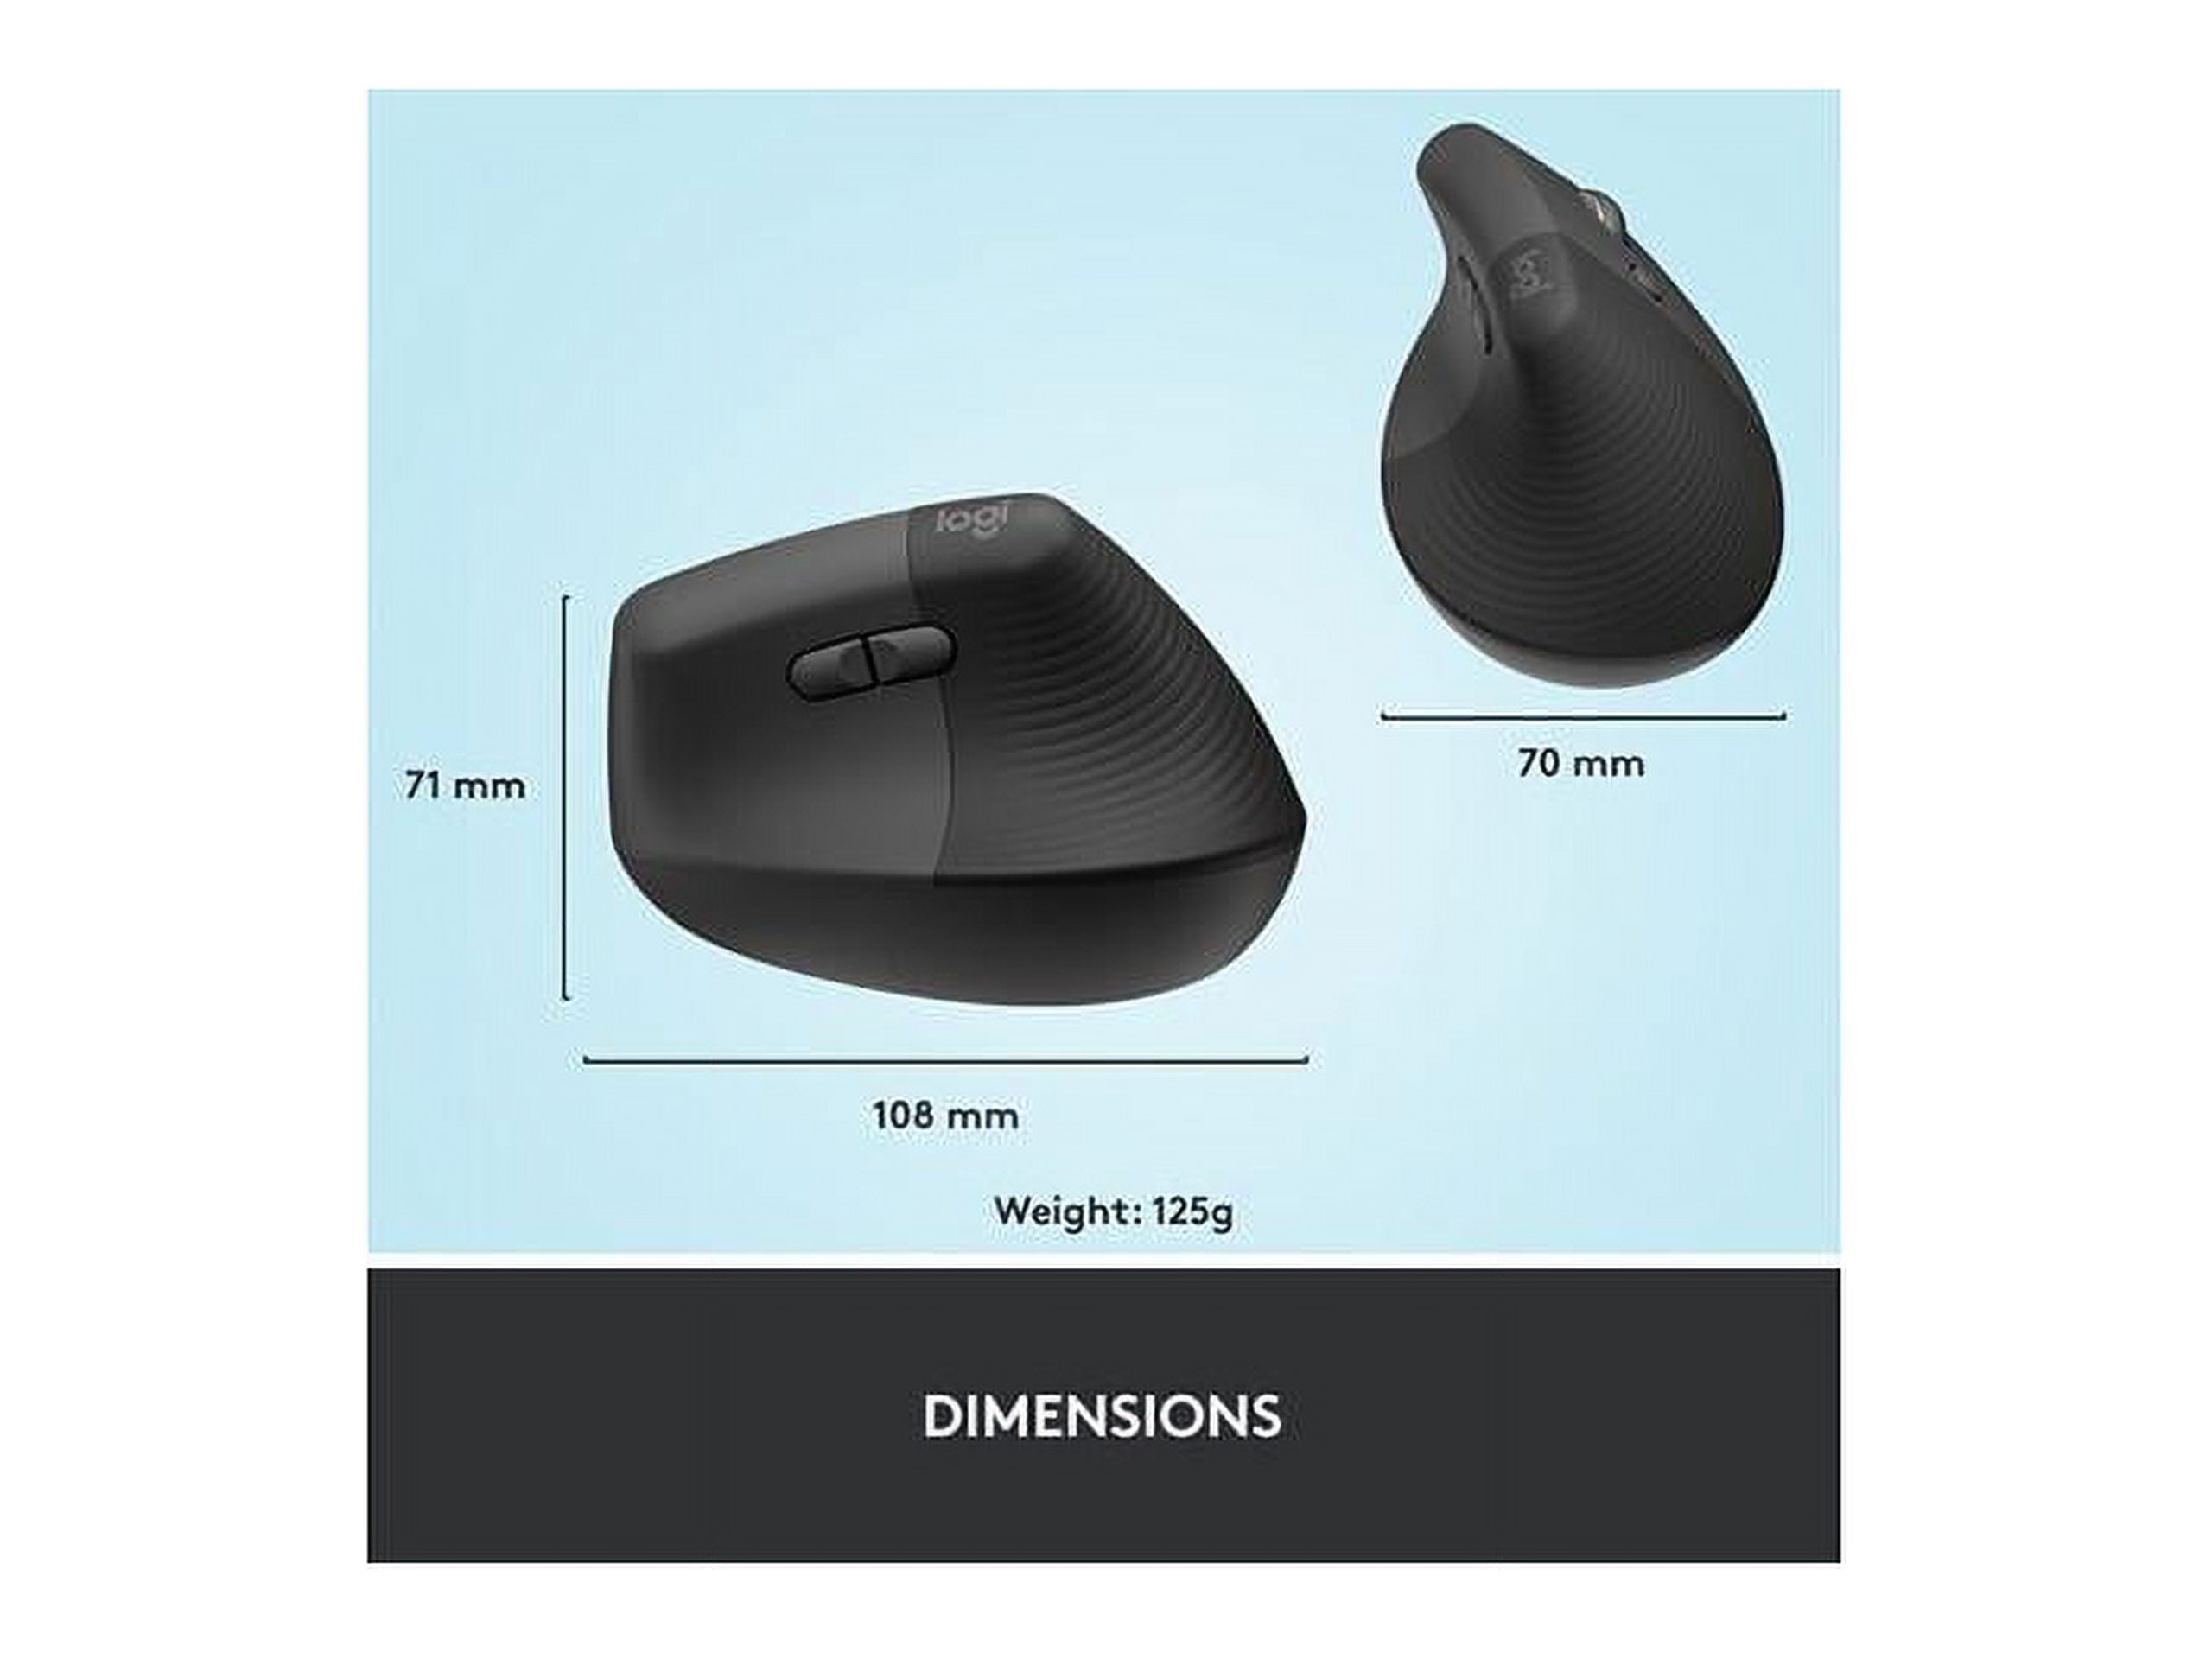 Logitech LIFT VERTICAL Ergonomic Wireless Mouse - Victory Store